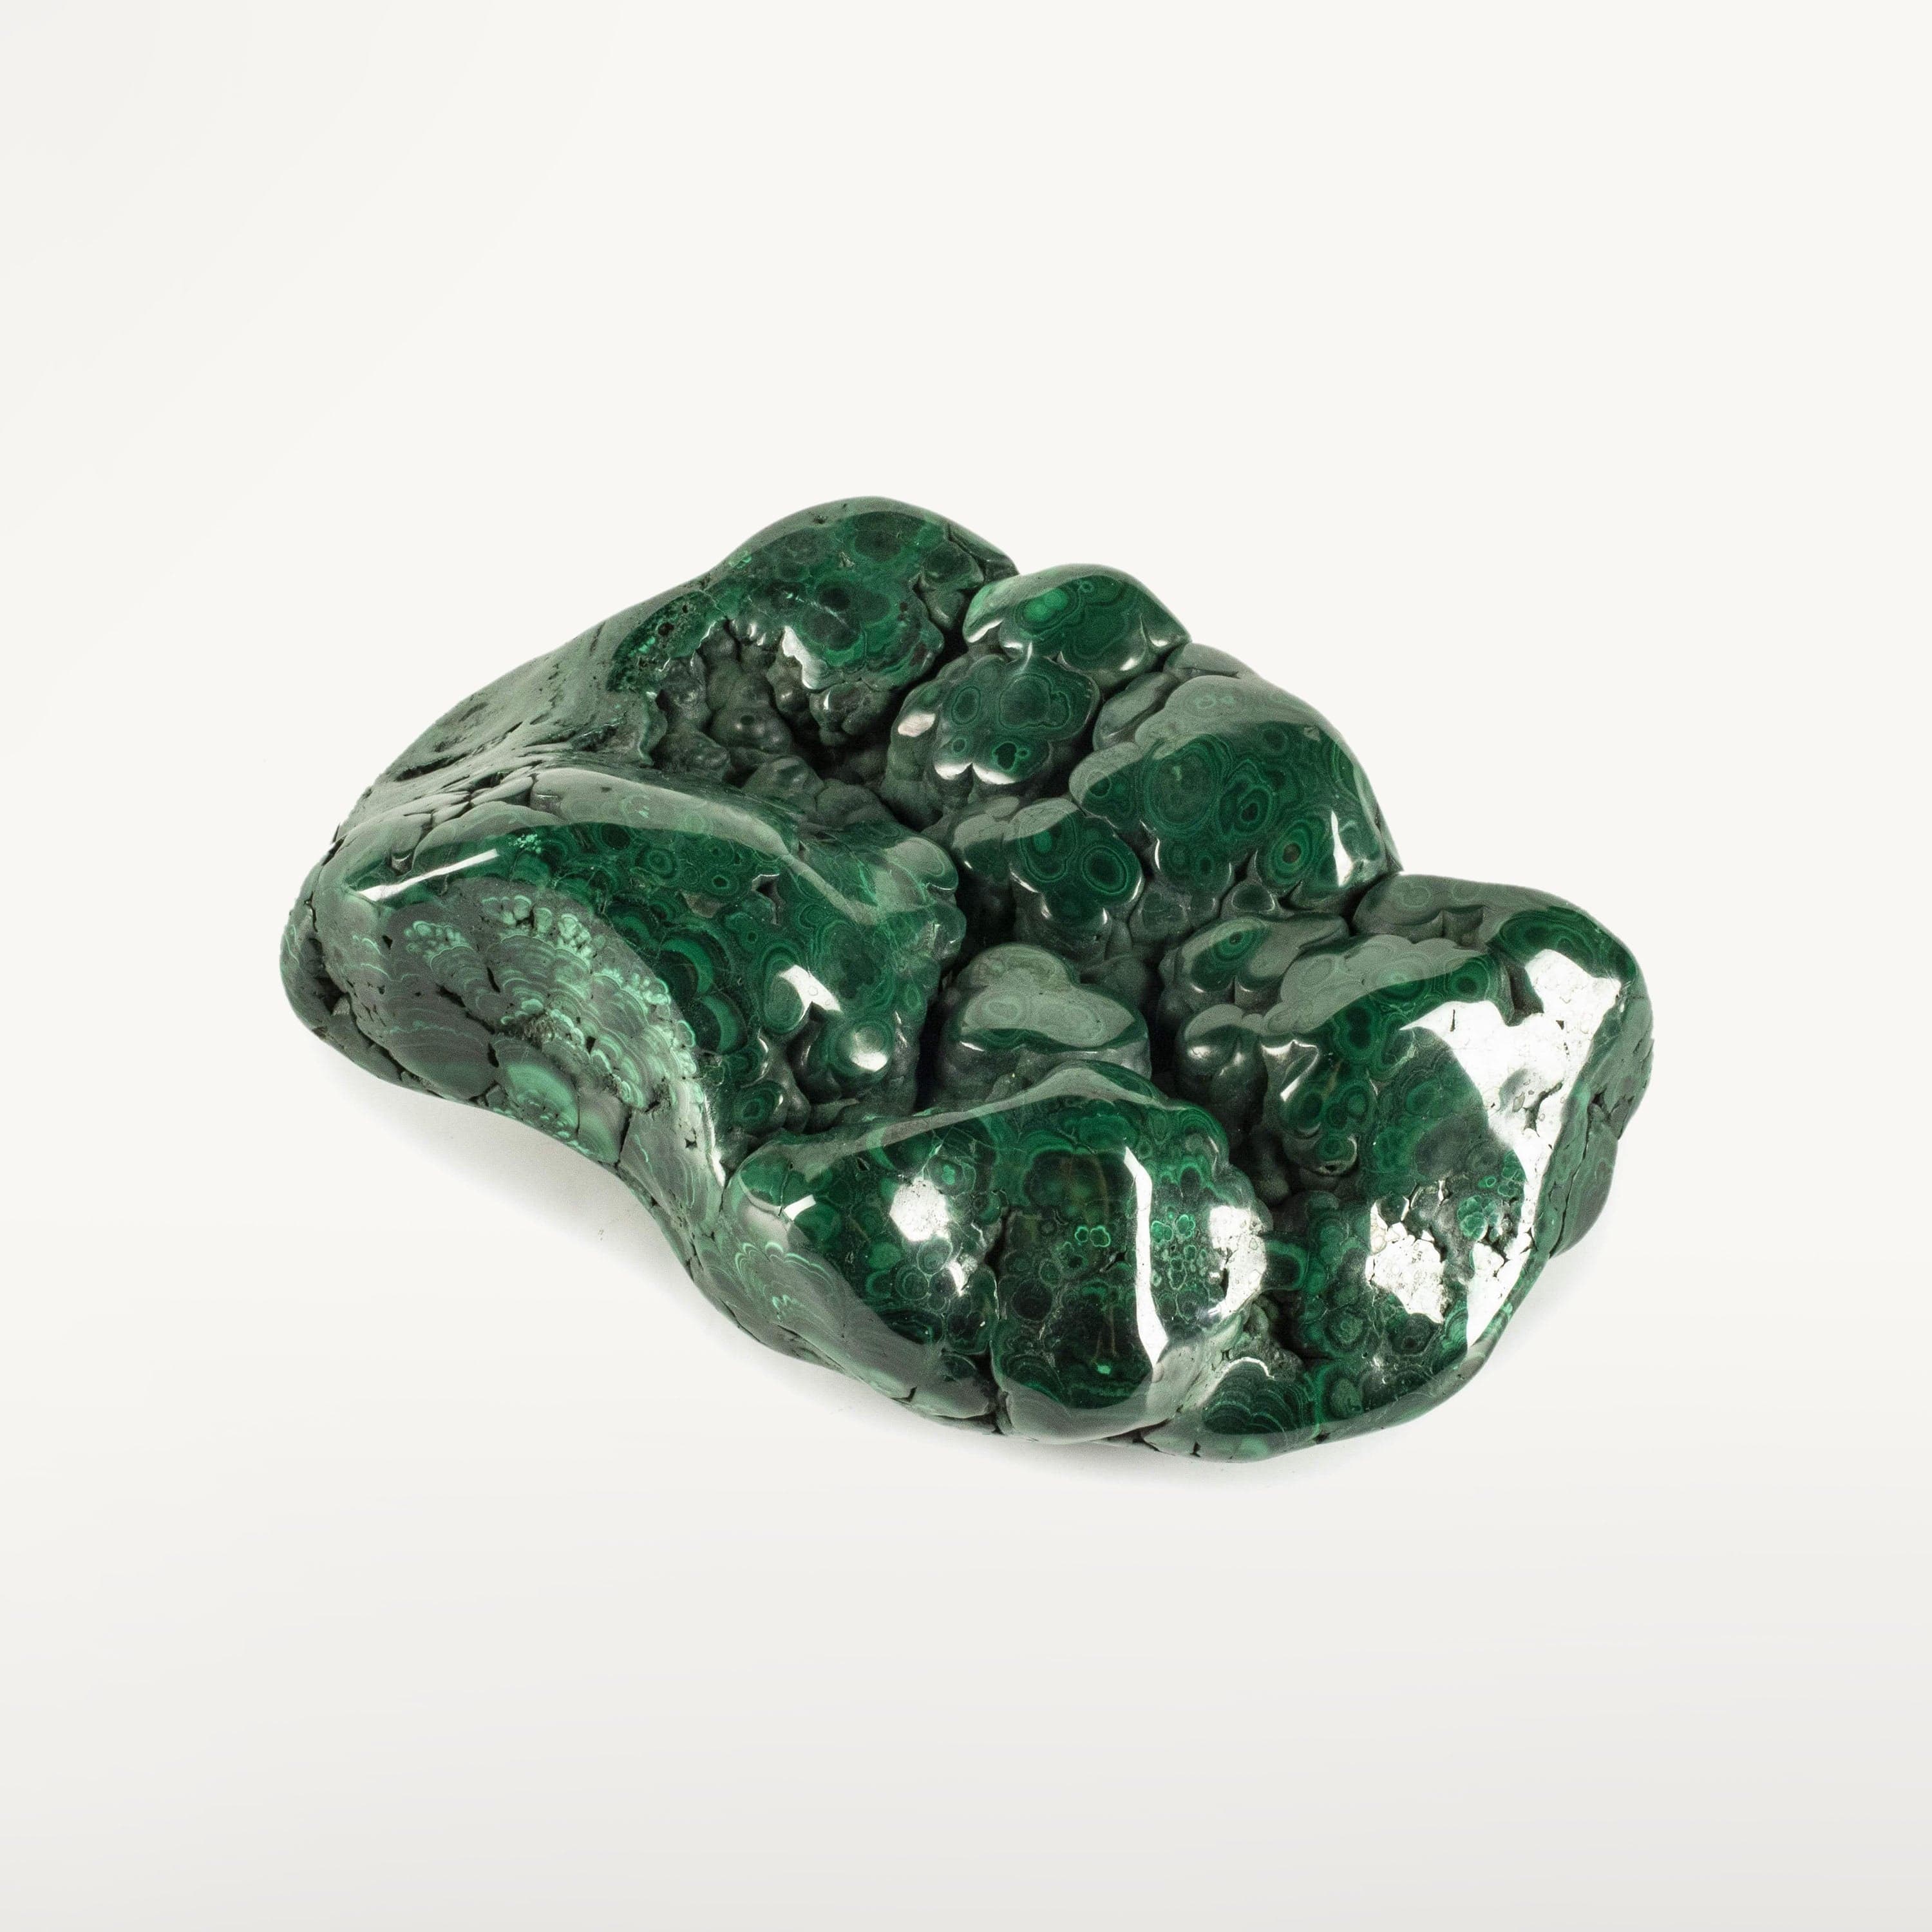 Kalifano Malachite Rare Natural Green Malachite Polished Freeform Specimen from Congo - 5.3 kg / 11.7 lbs MA3400.001